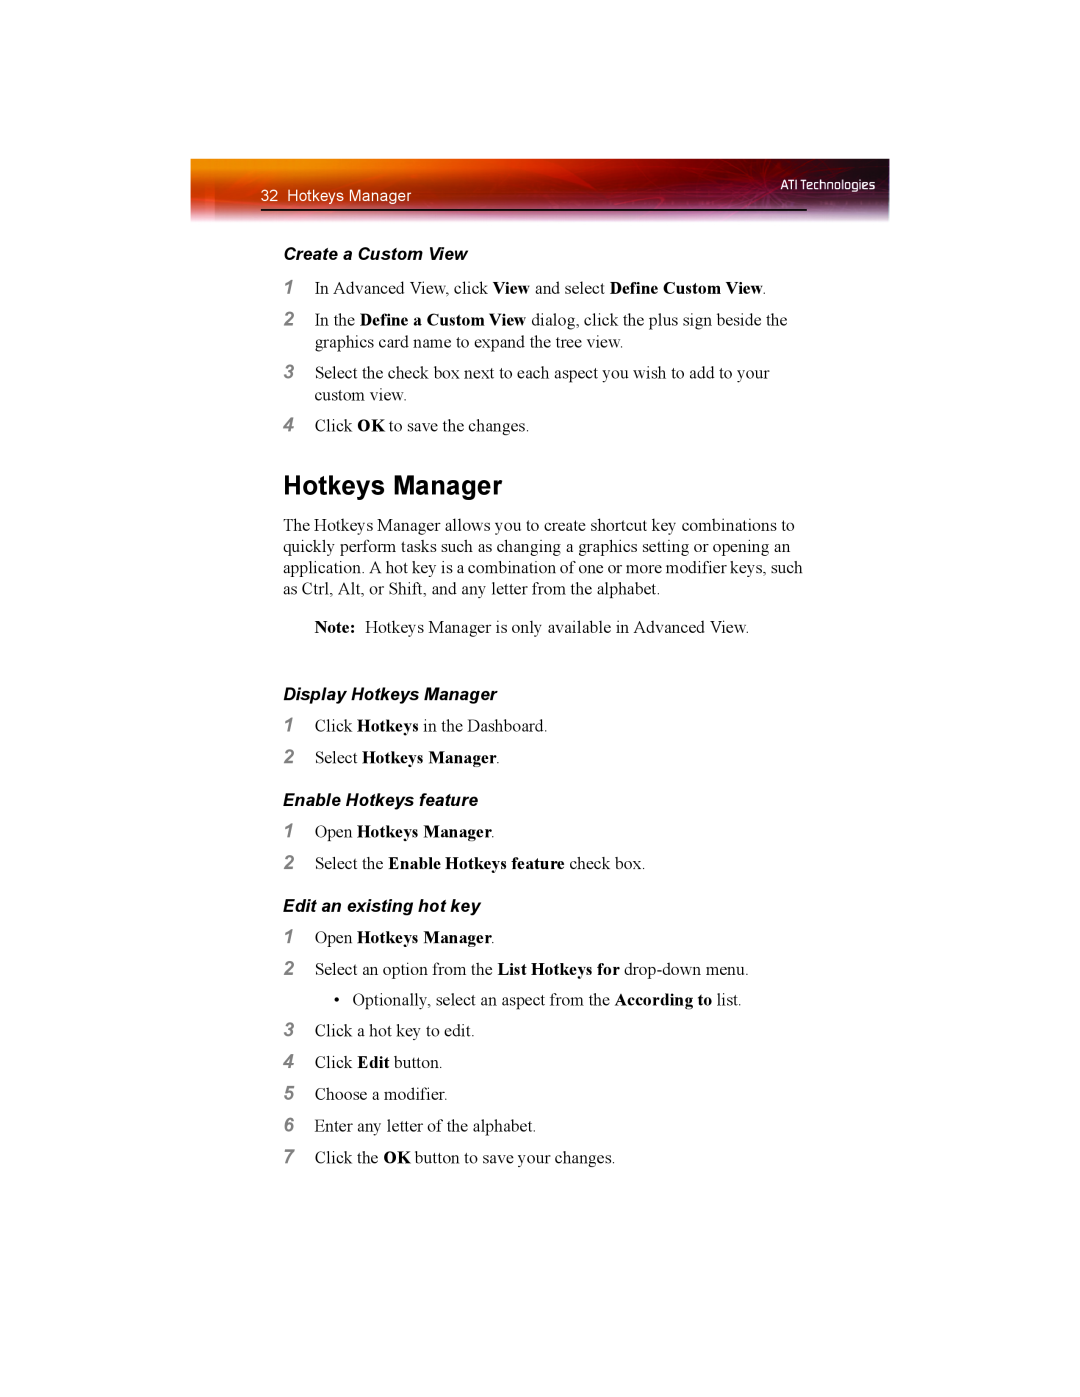 ATI Technologies X1550 SERIES manual Create a Custom View, Display Hotkeys Manager, Select Hotkeys Manager 